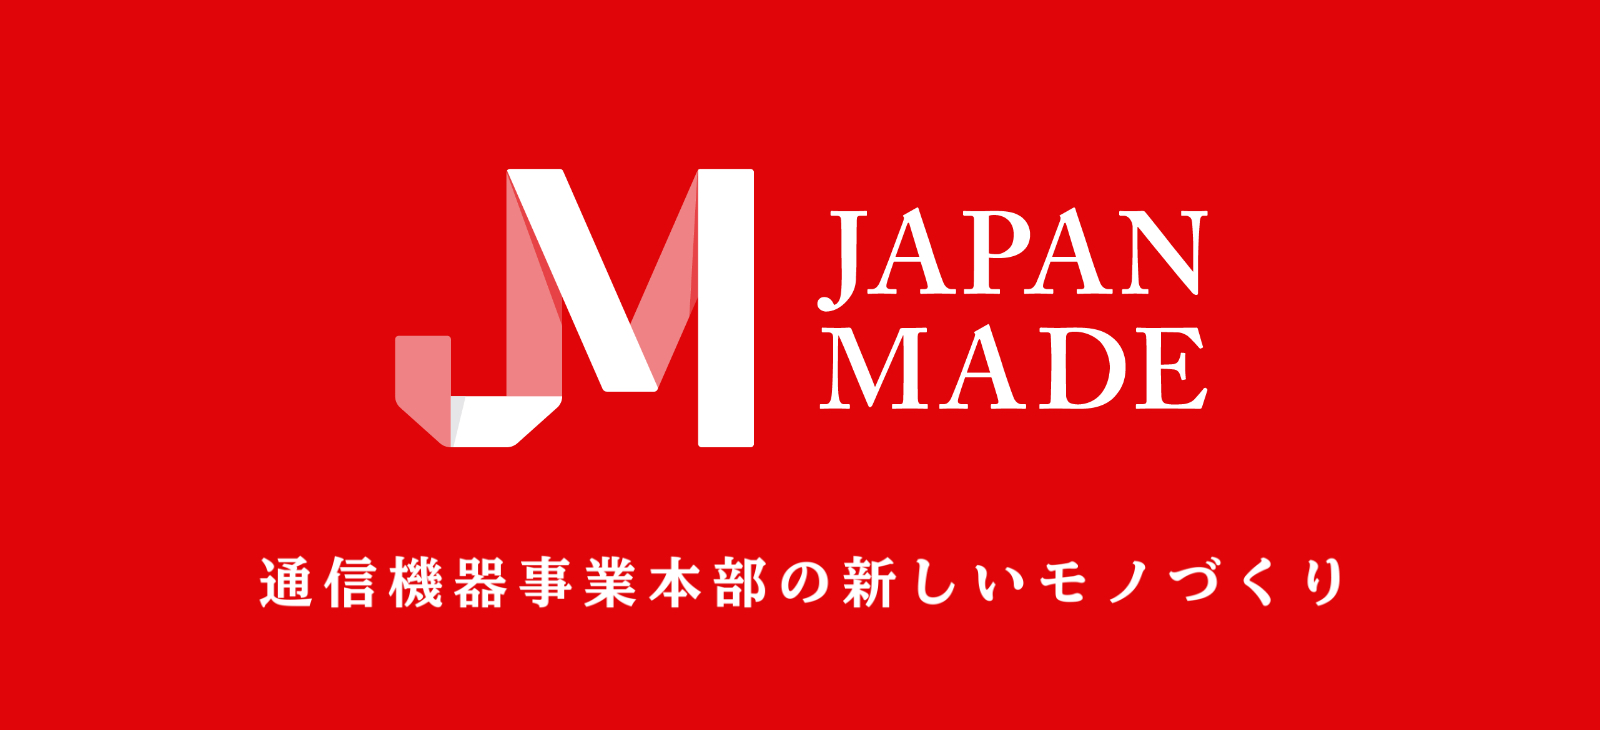 「JAPAN MADE」通信機器事業本部の新しいモノづくり